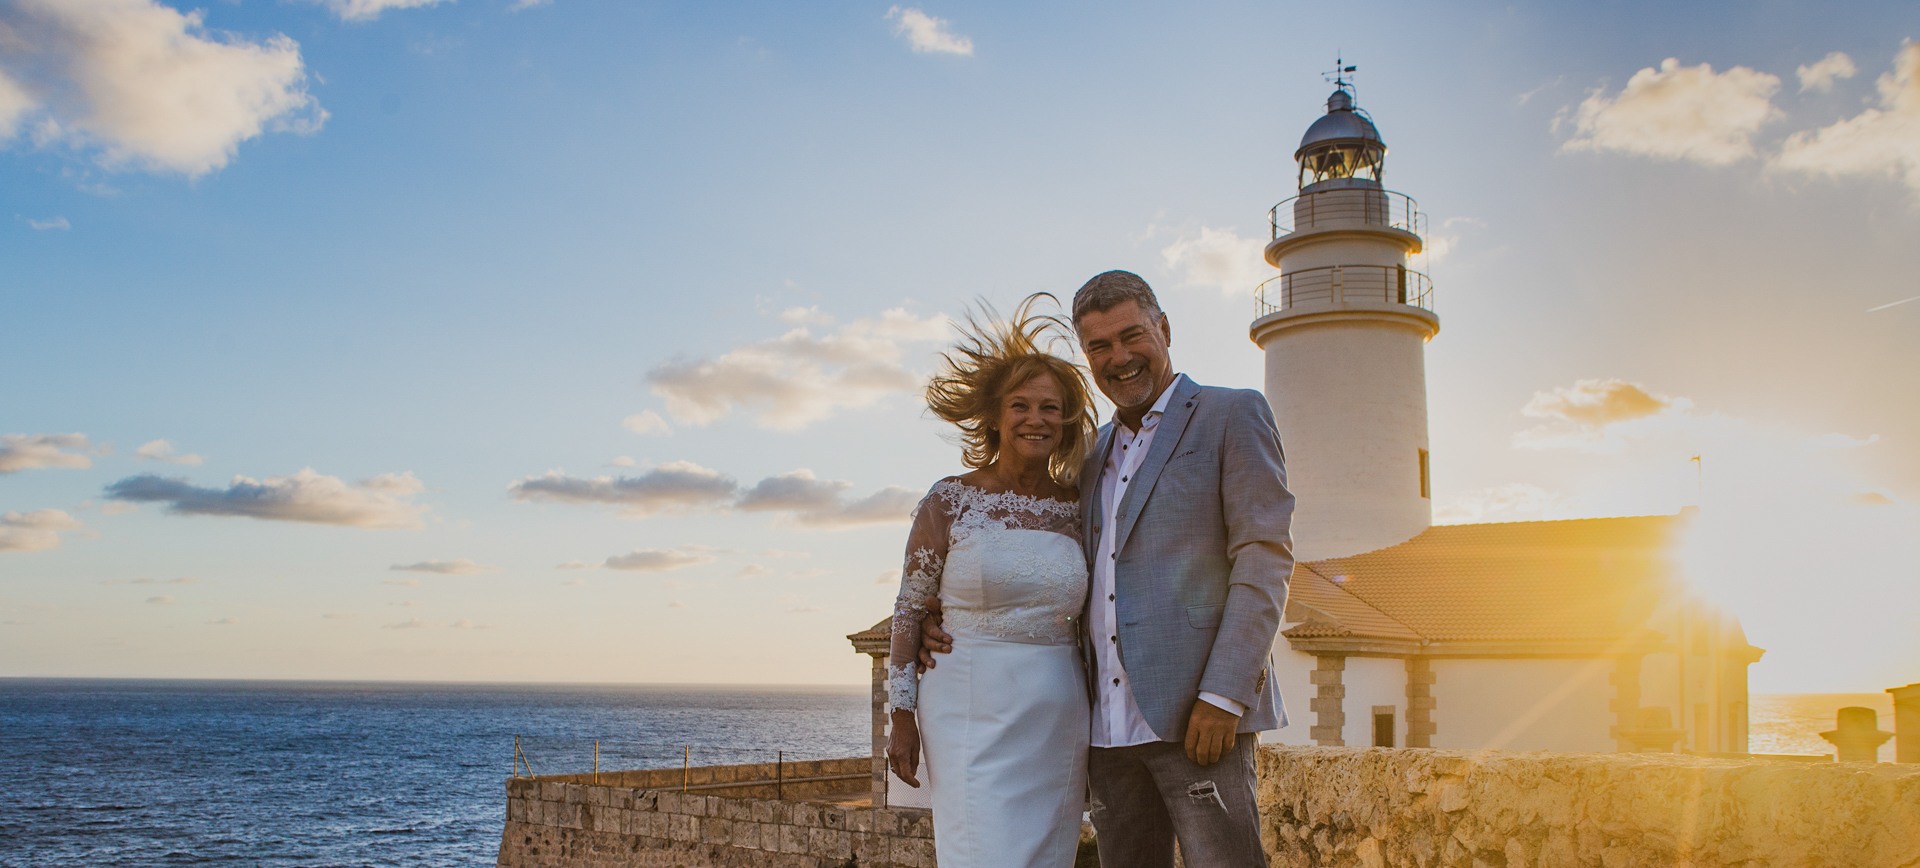 mallorca after wedding photoshoot at lighthouse